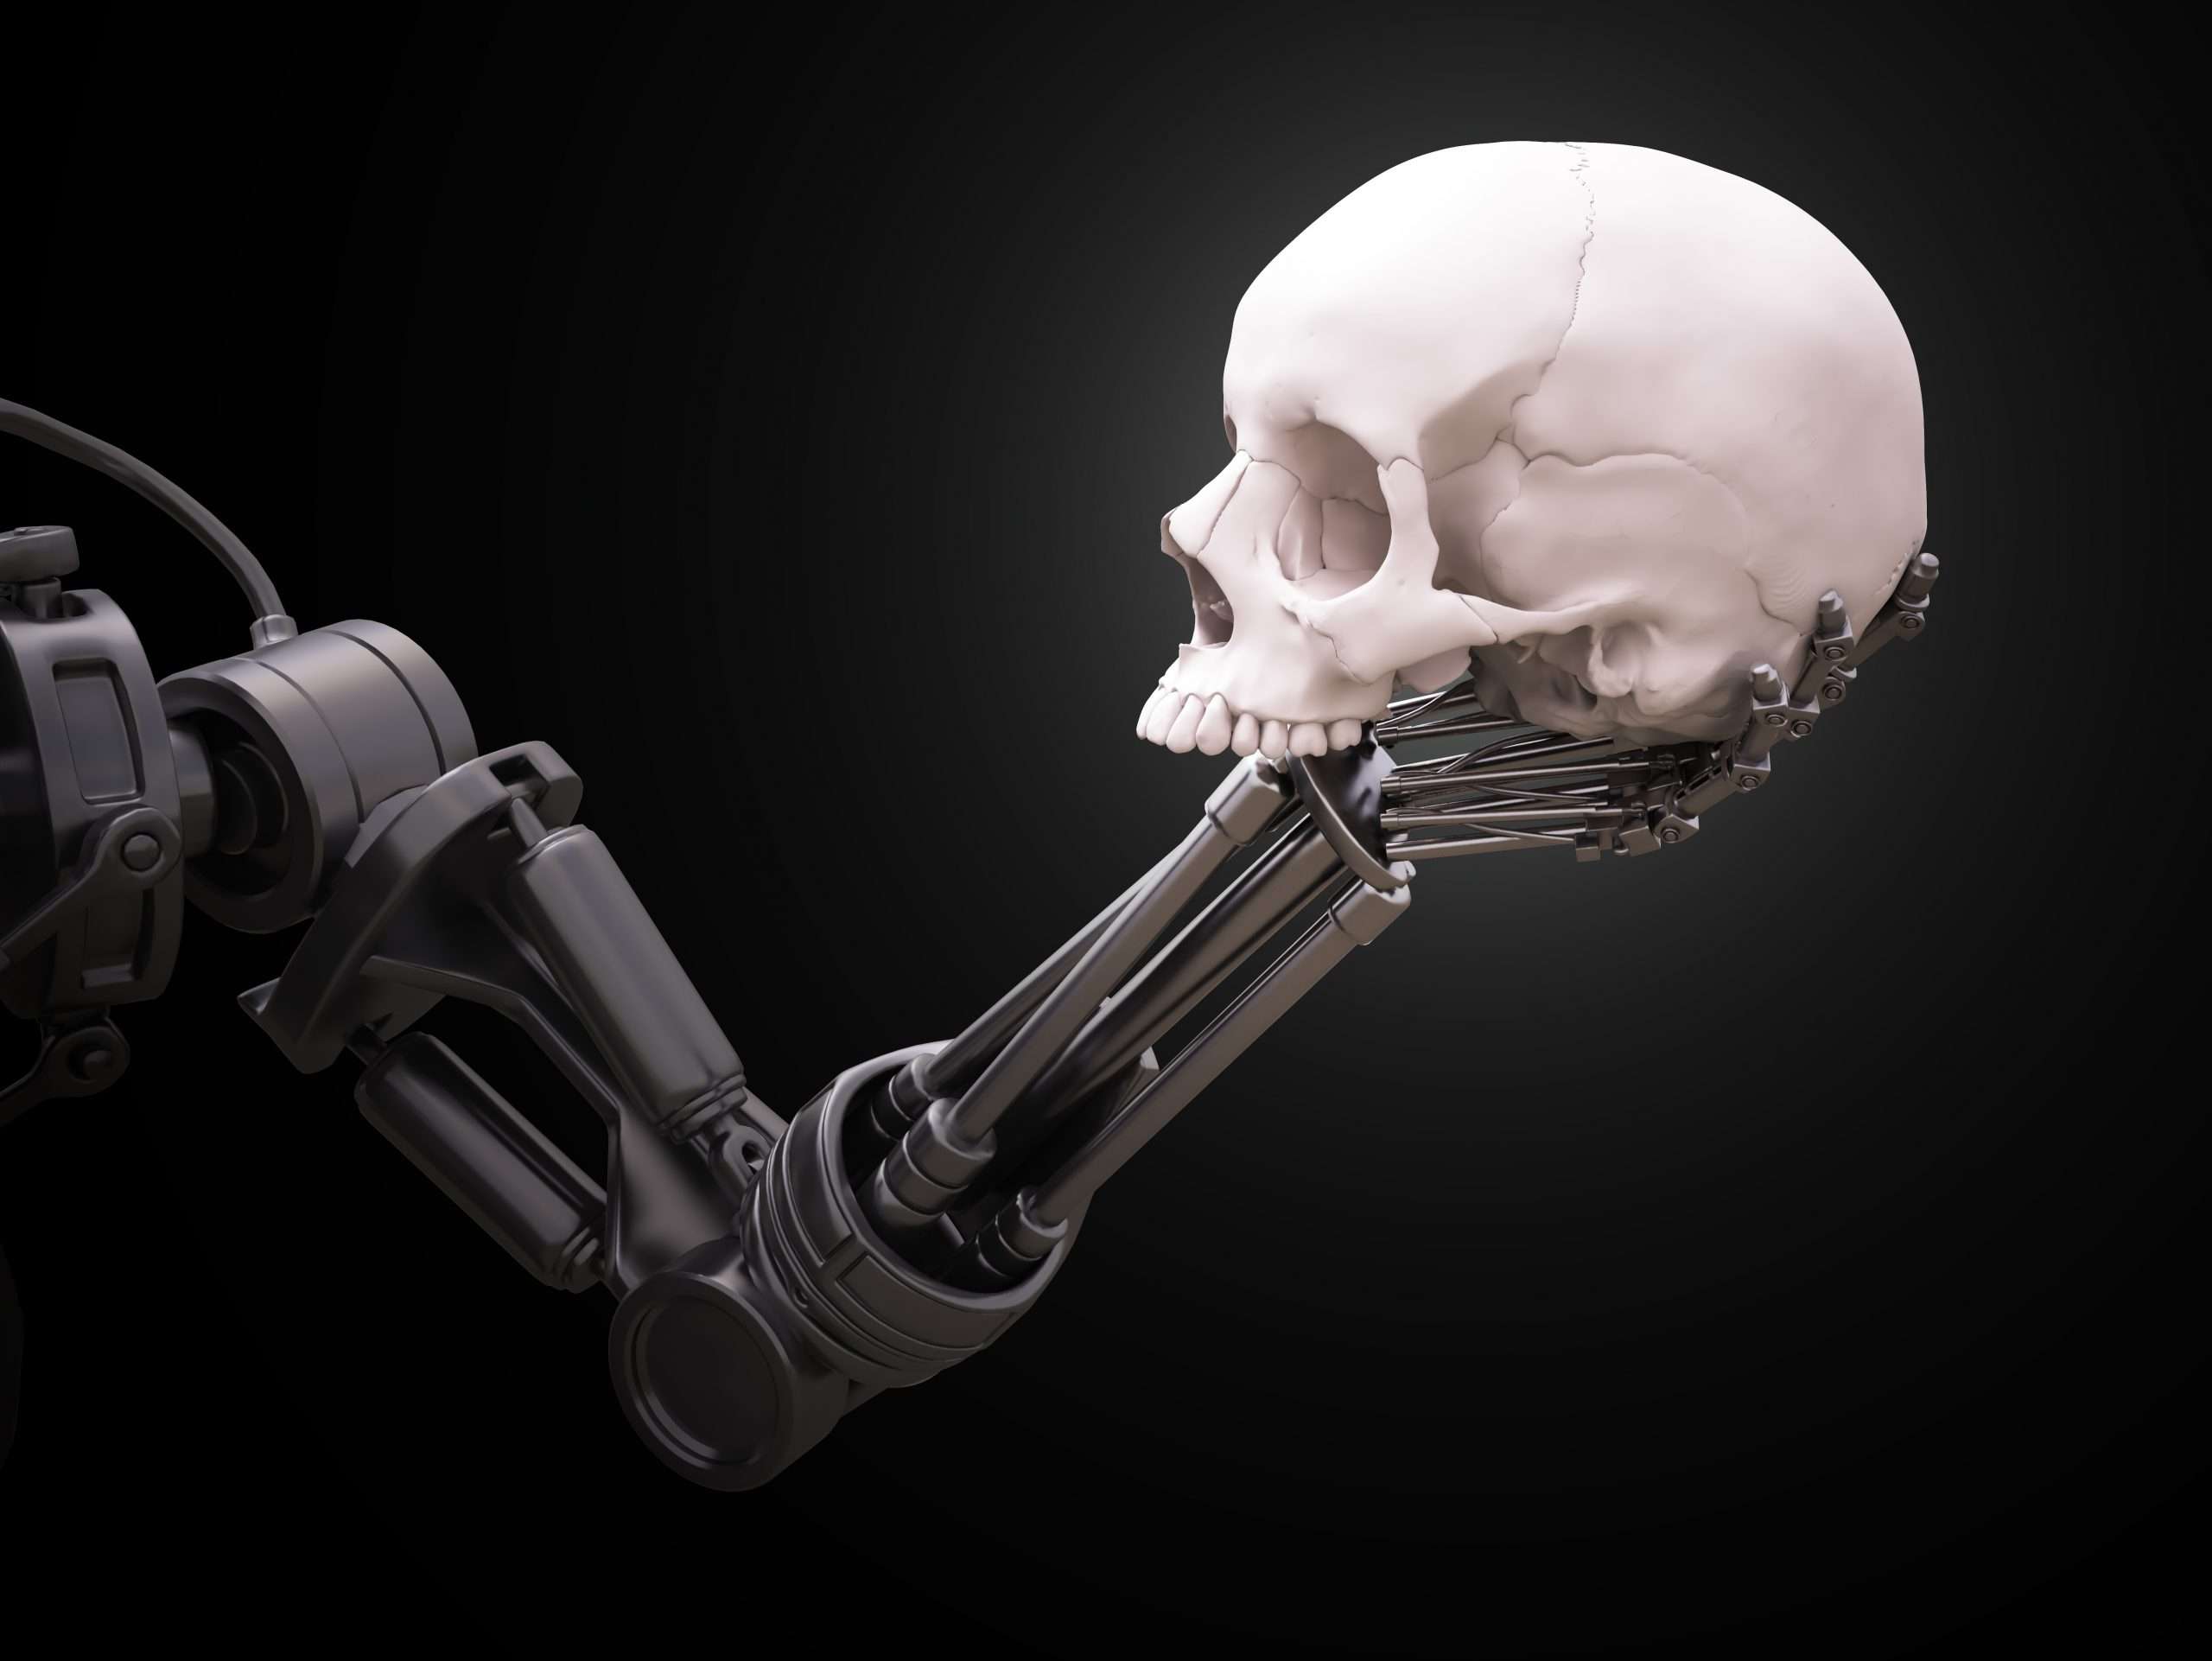 Robot,Arm,Holding,A,Human,Skull